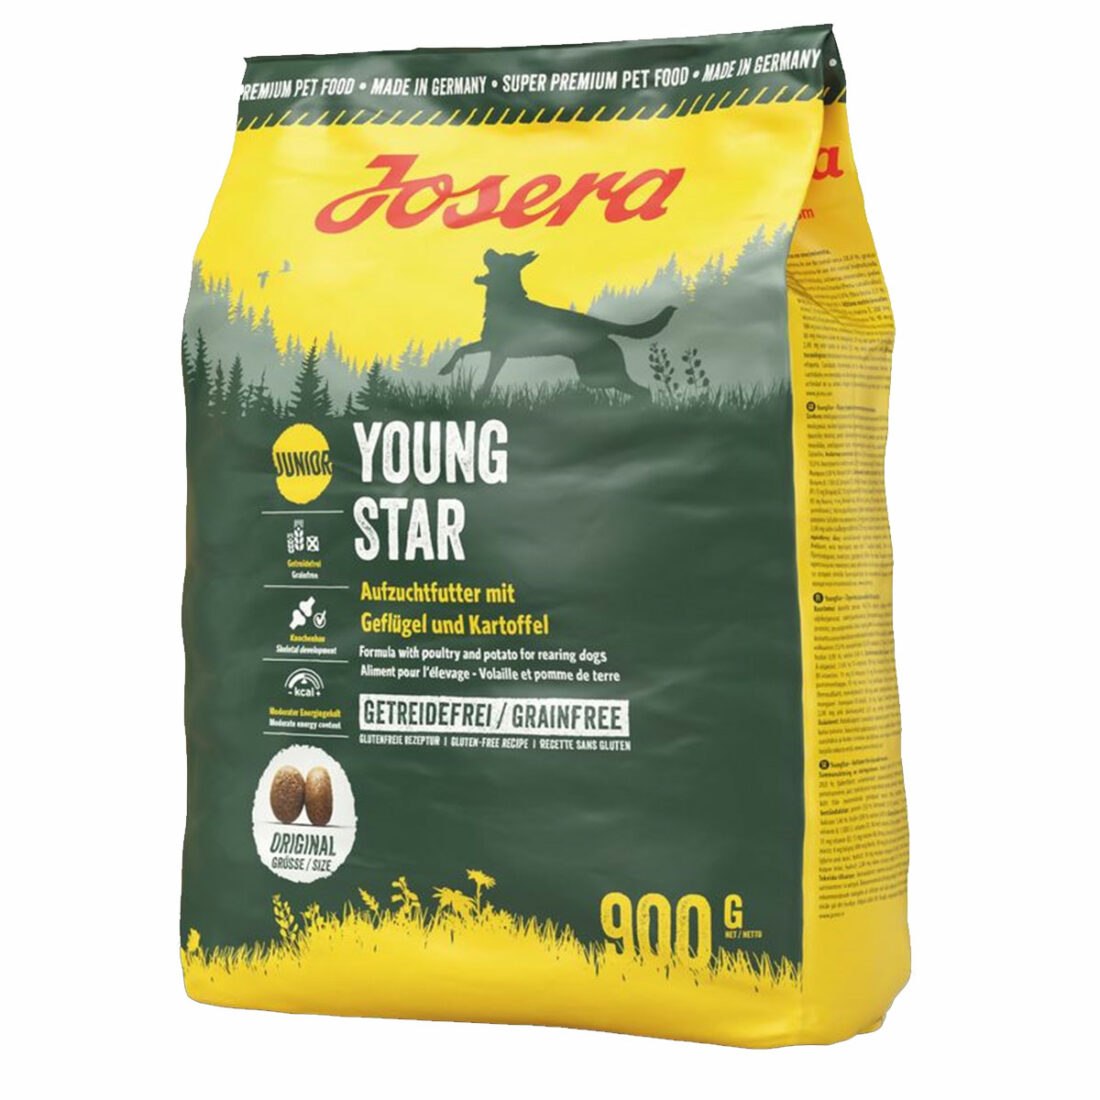 Josera Young Star 900